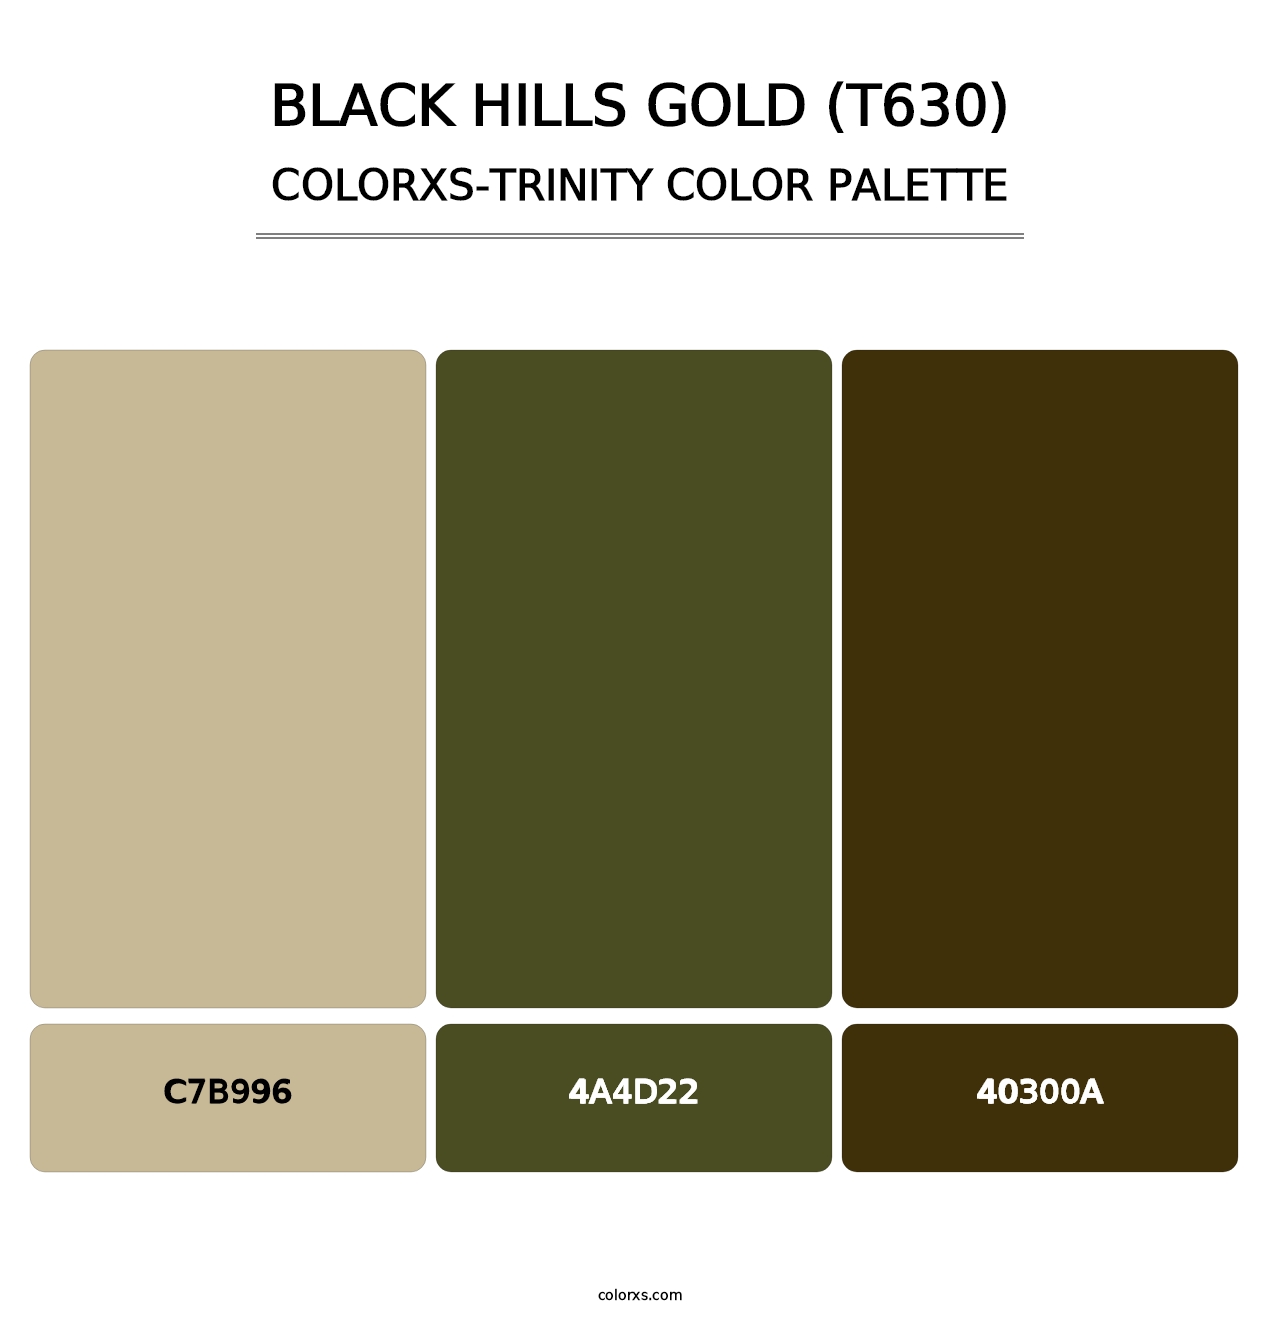 Black Hills Gold (T630) - Colorxs Trinity Palette